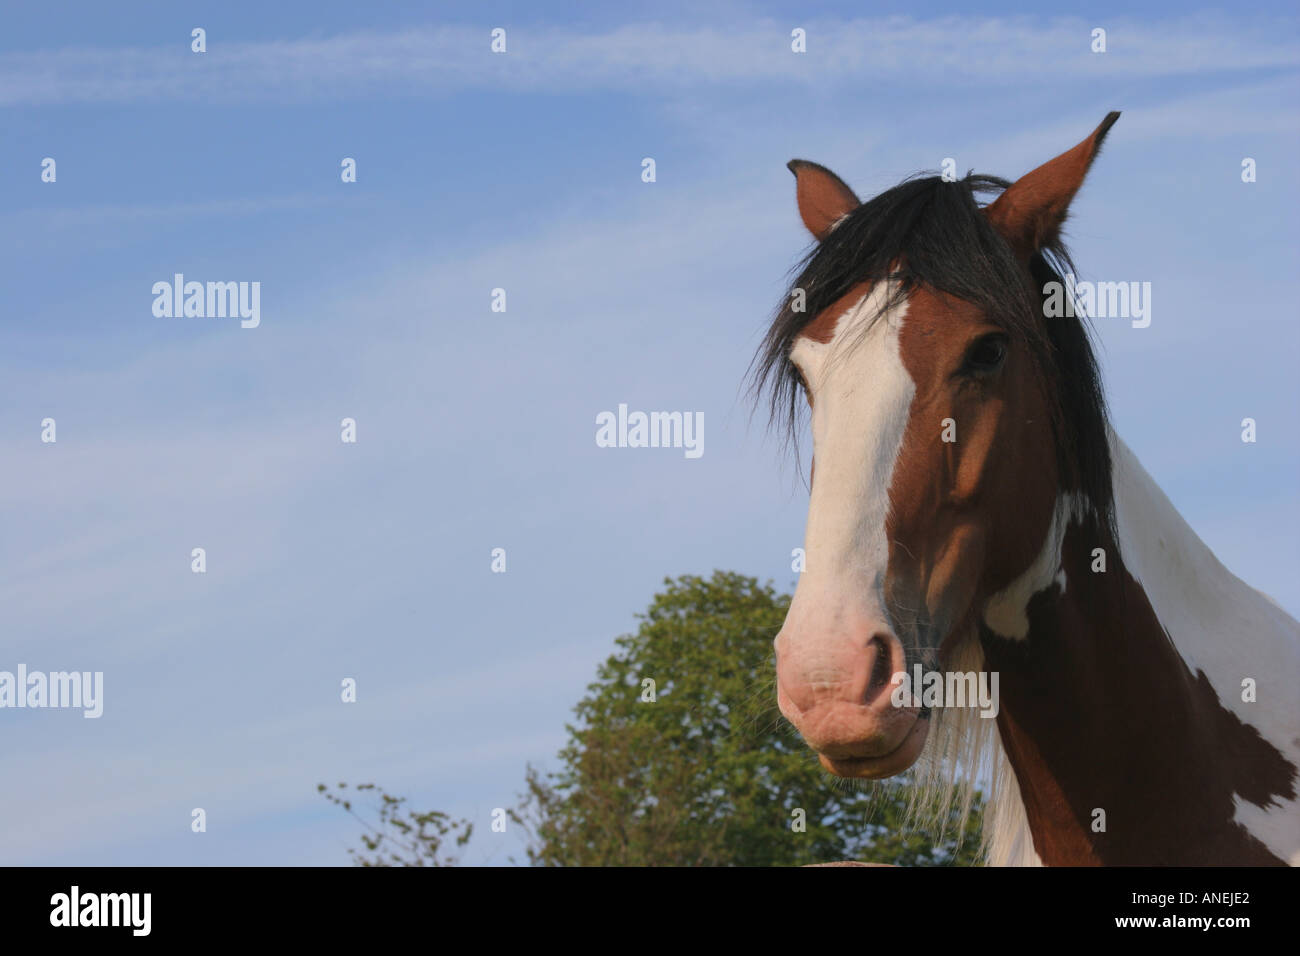 Horses head against blue sky Stock Photo